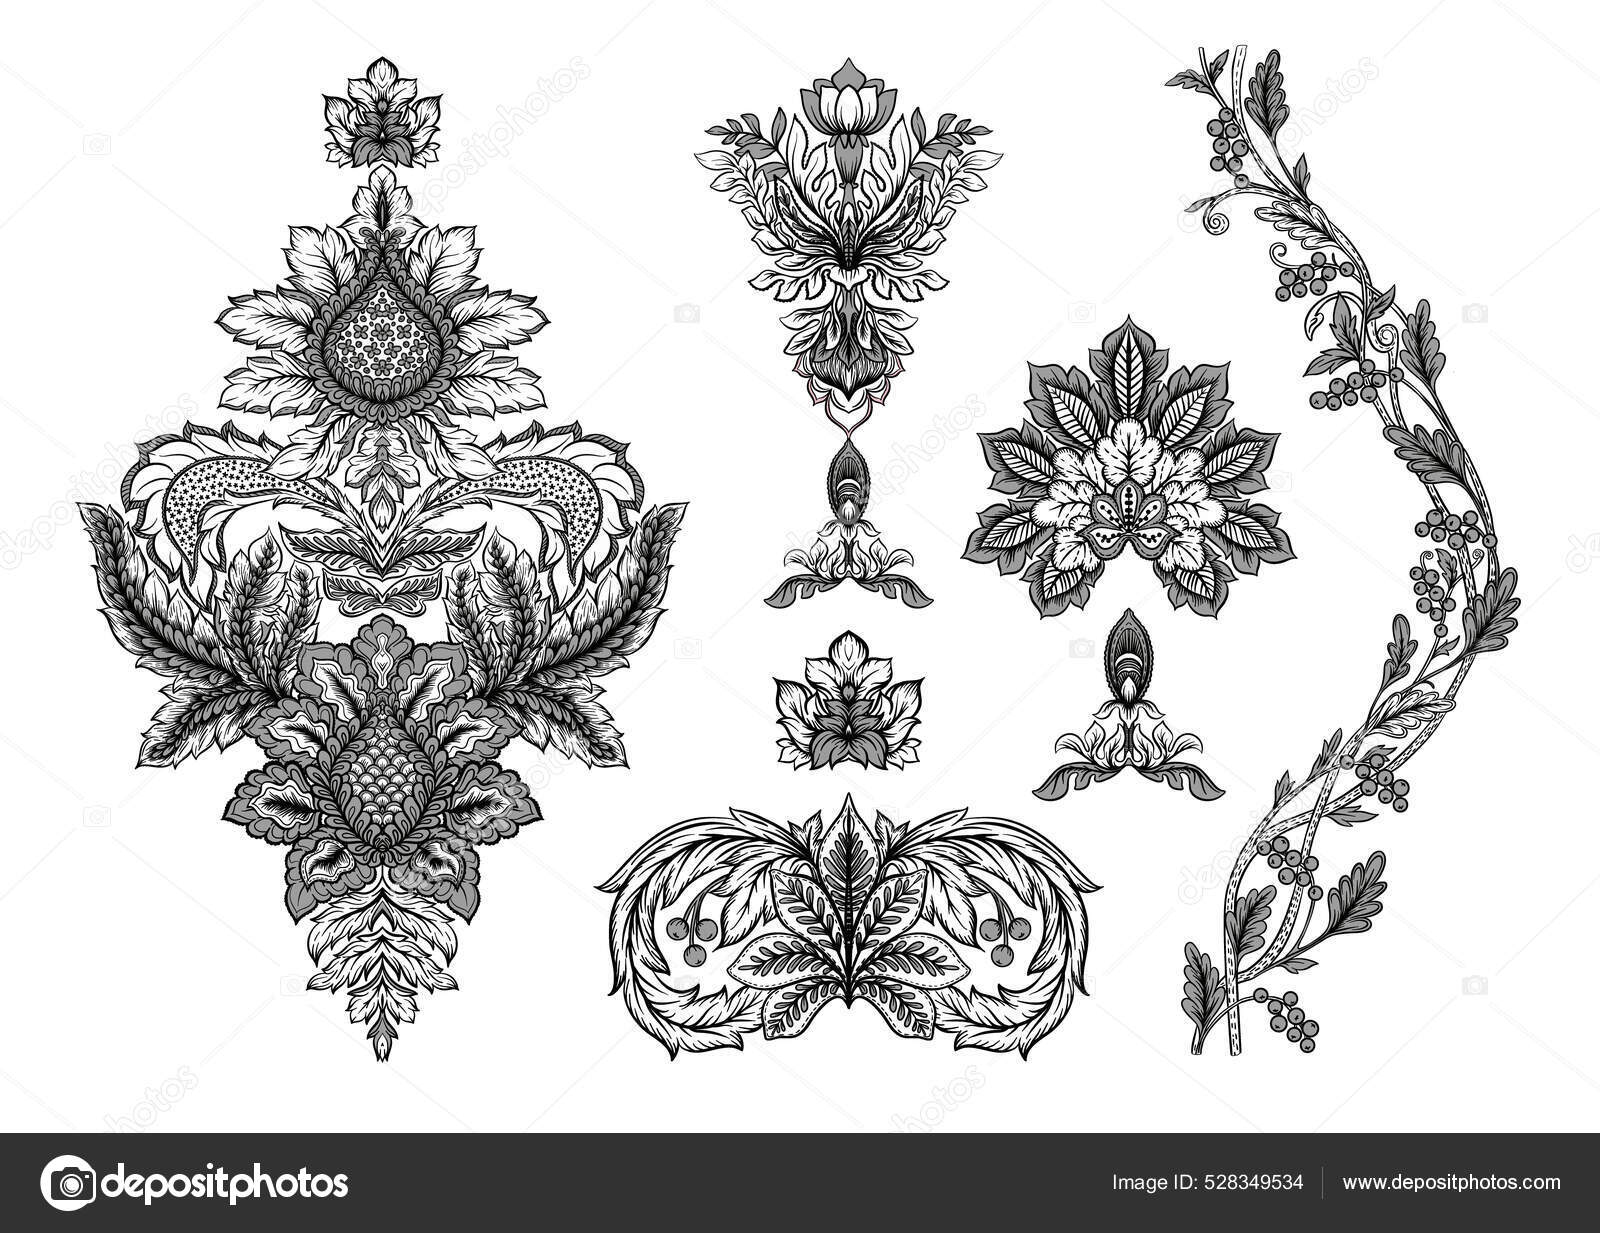 Elements Of Victorian Floral Design